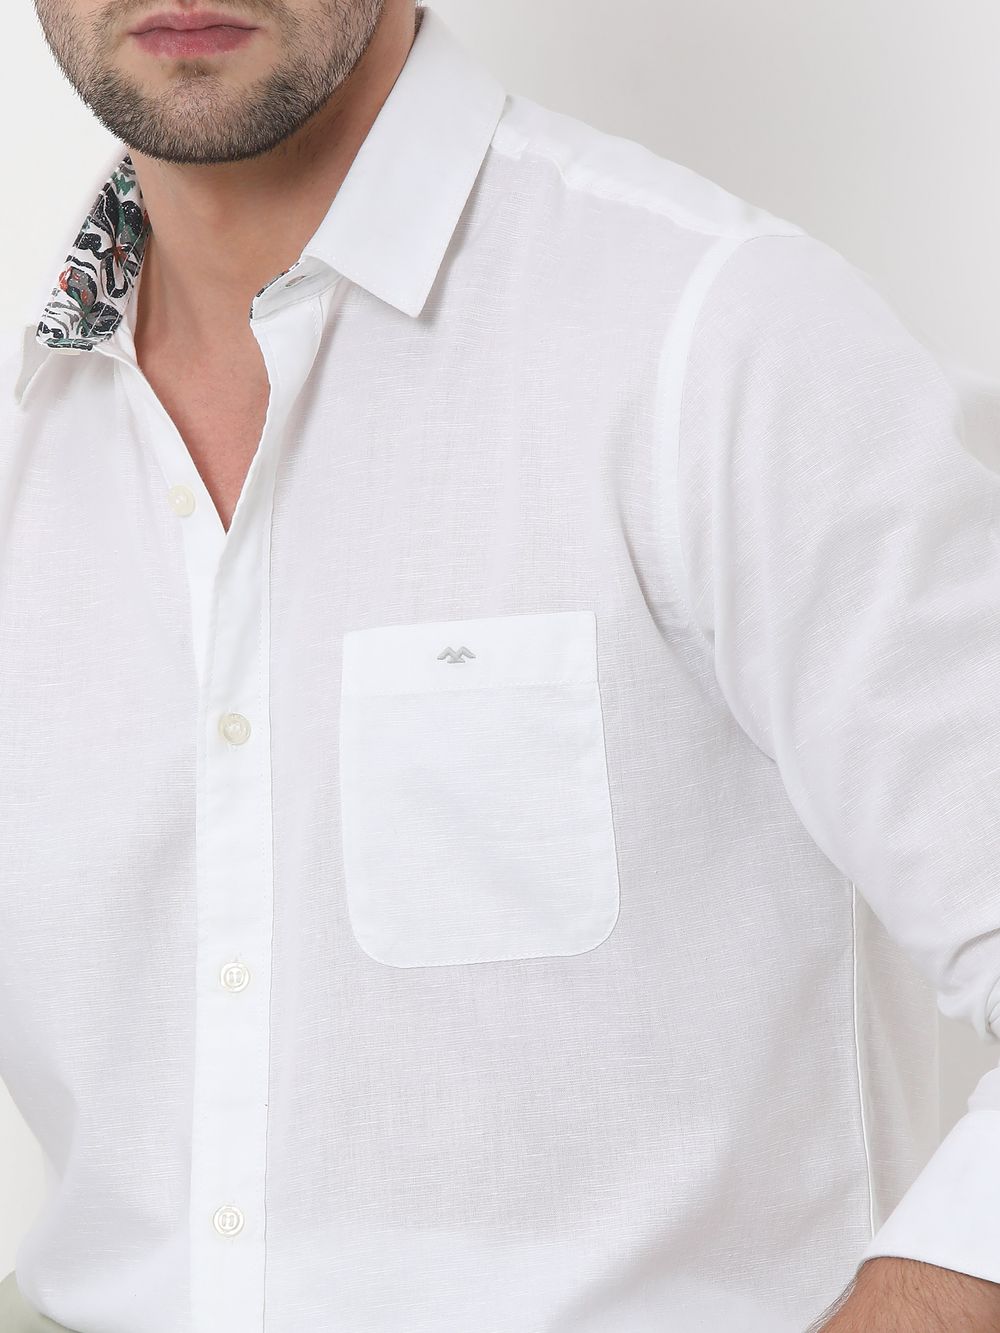 White Cotton Linen Plain Shirt